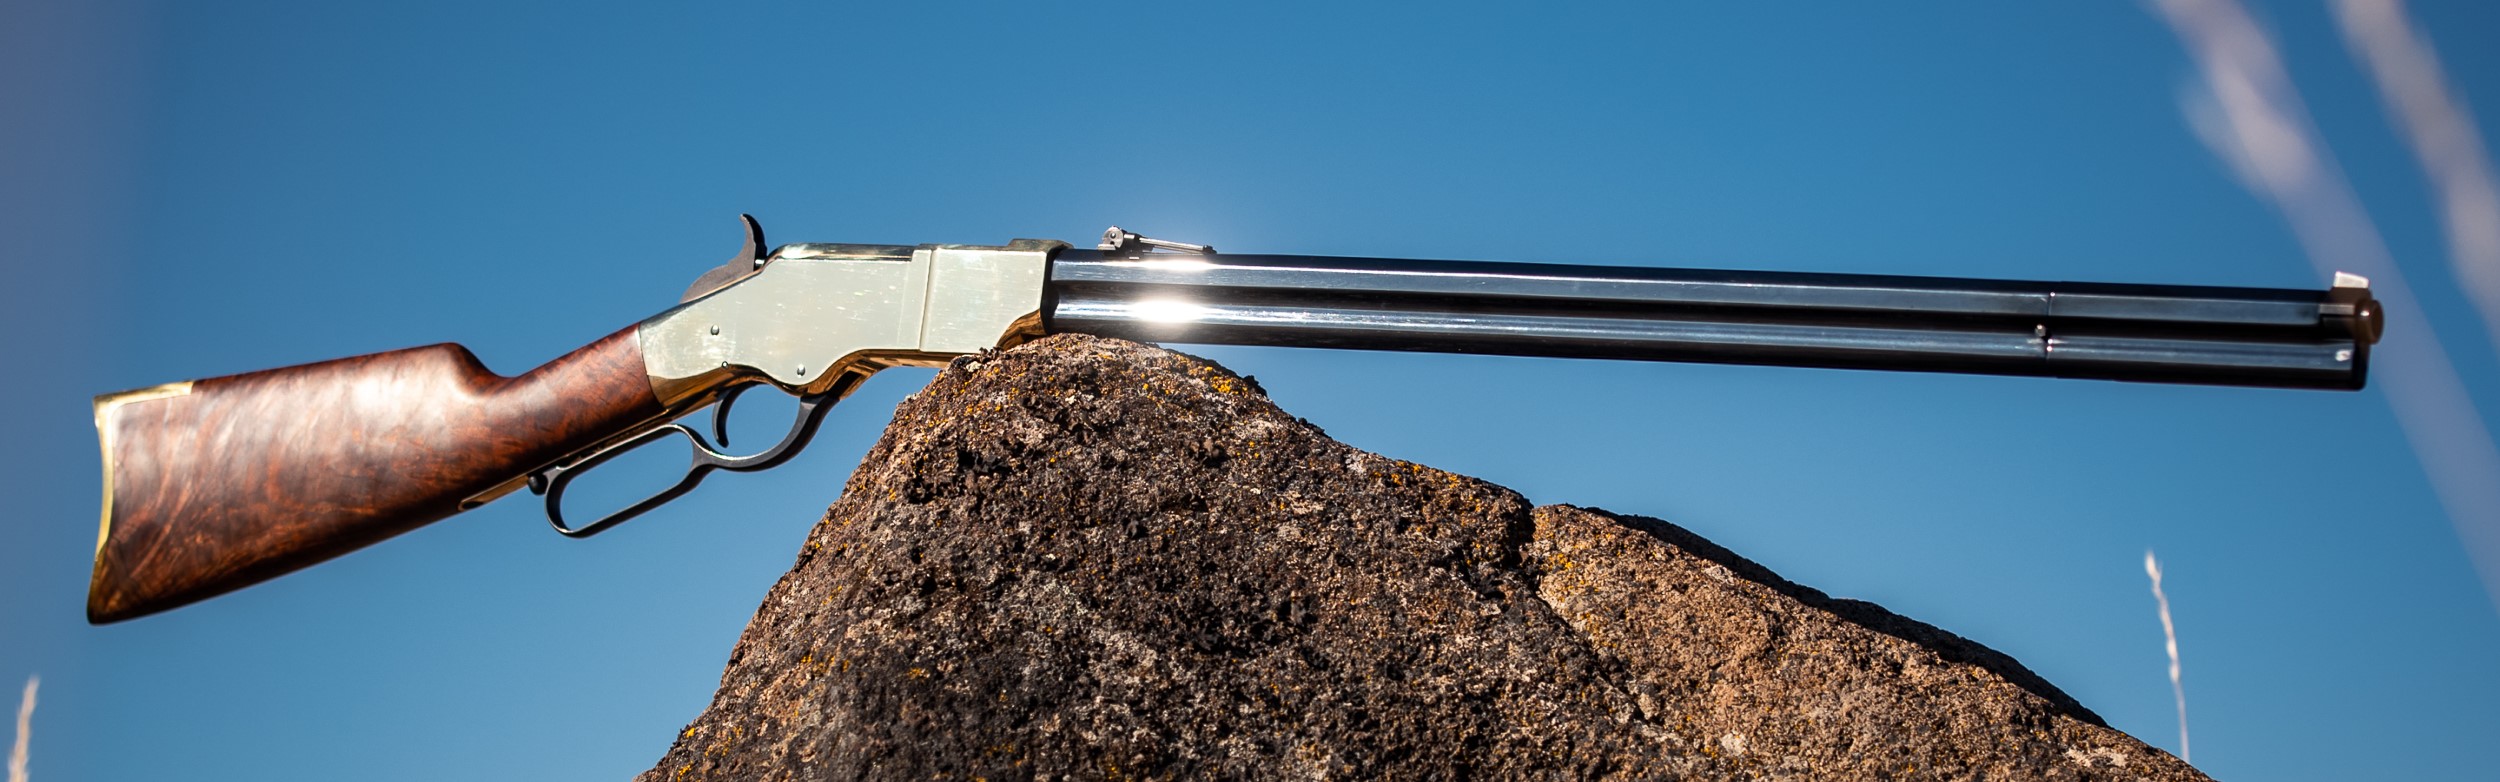 Photograph of New Original Henry Rifle balancing on a rock